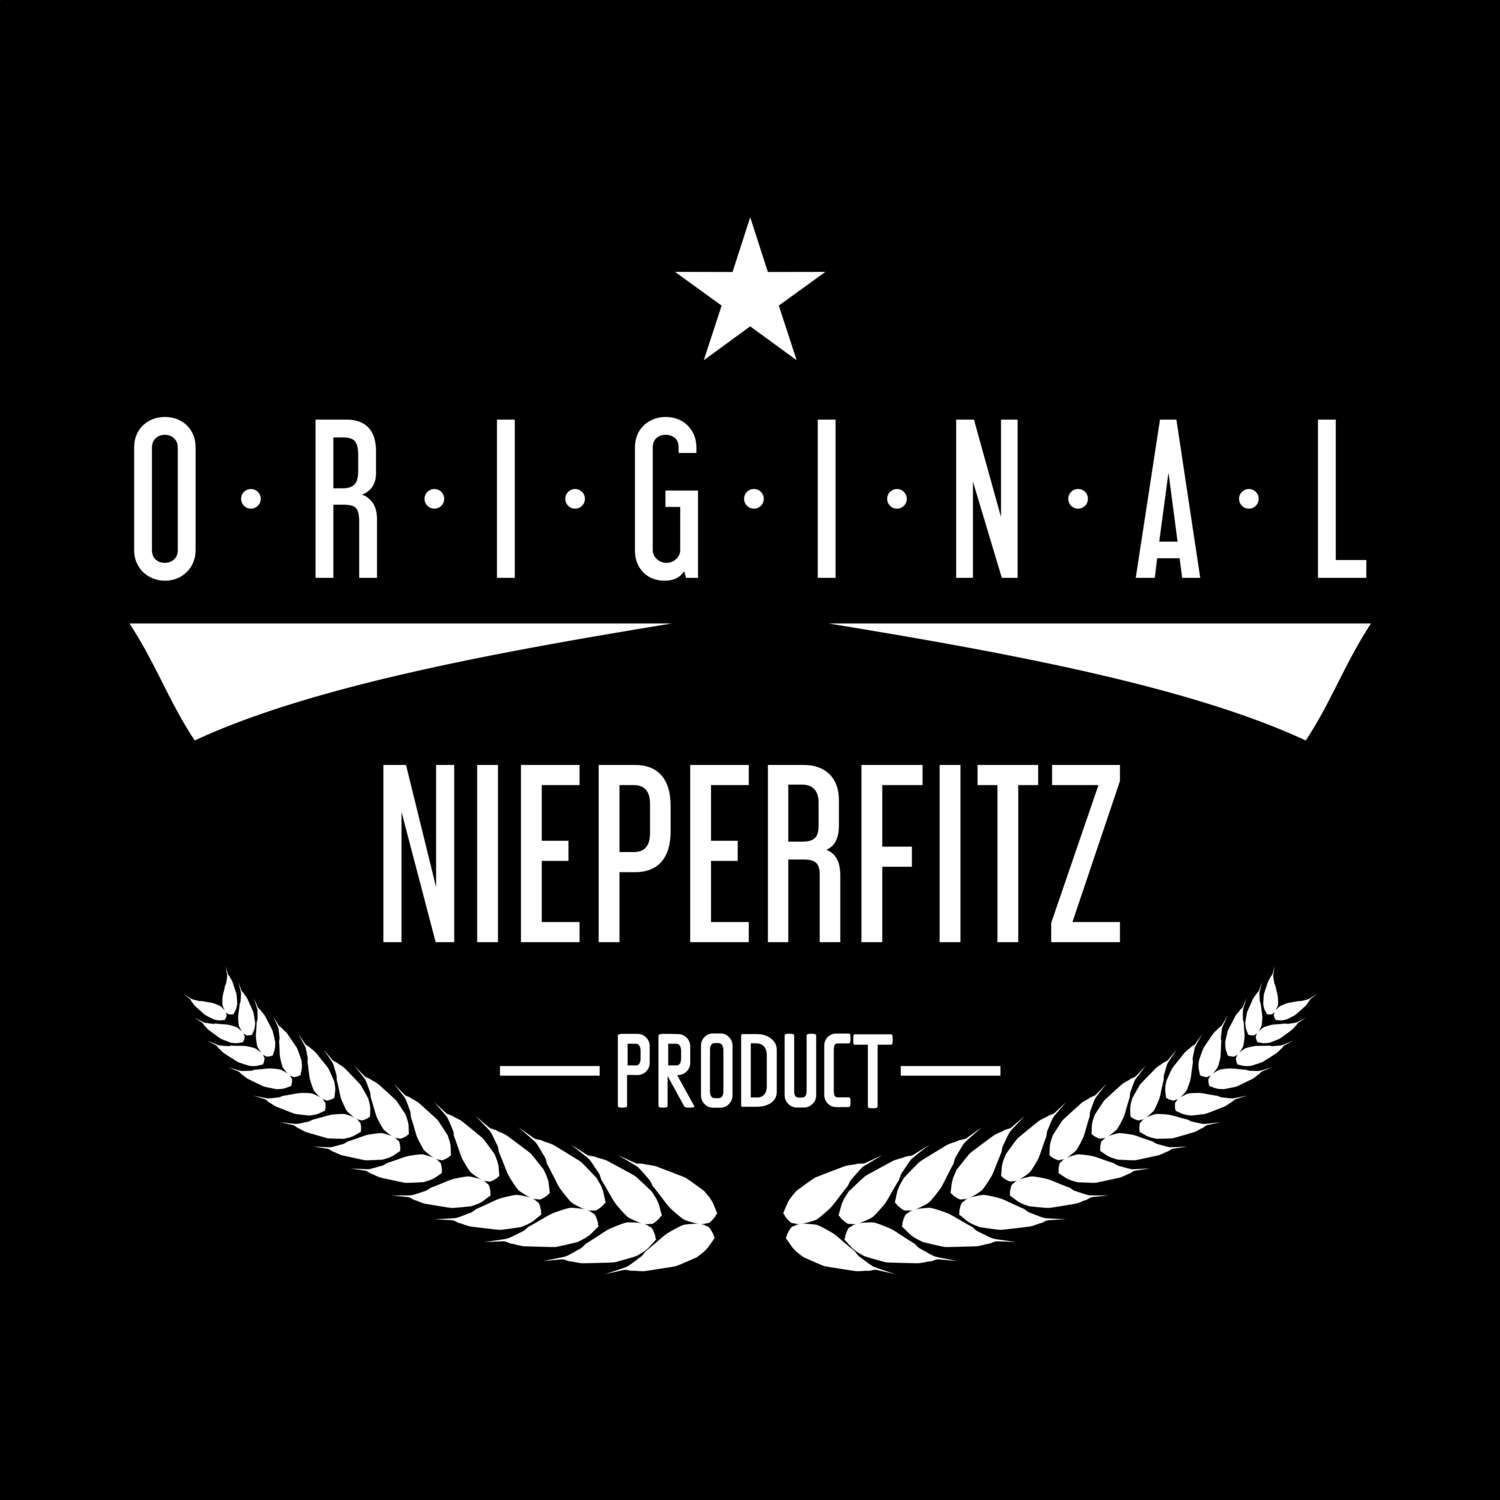 Nieperfitz T-Shirt »Original Product«